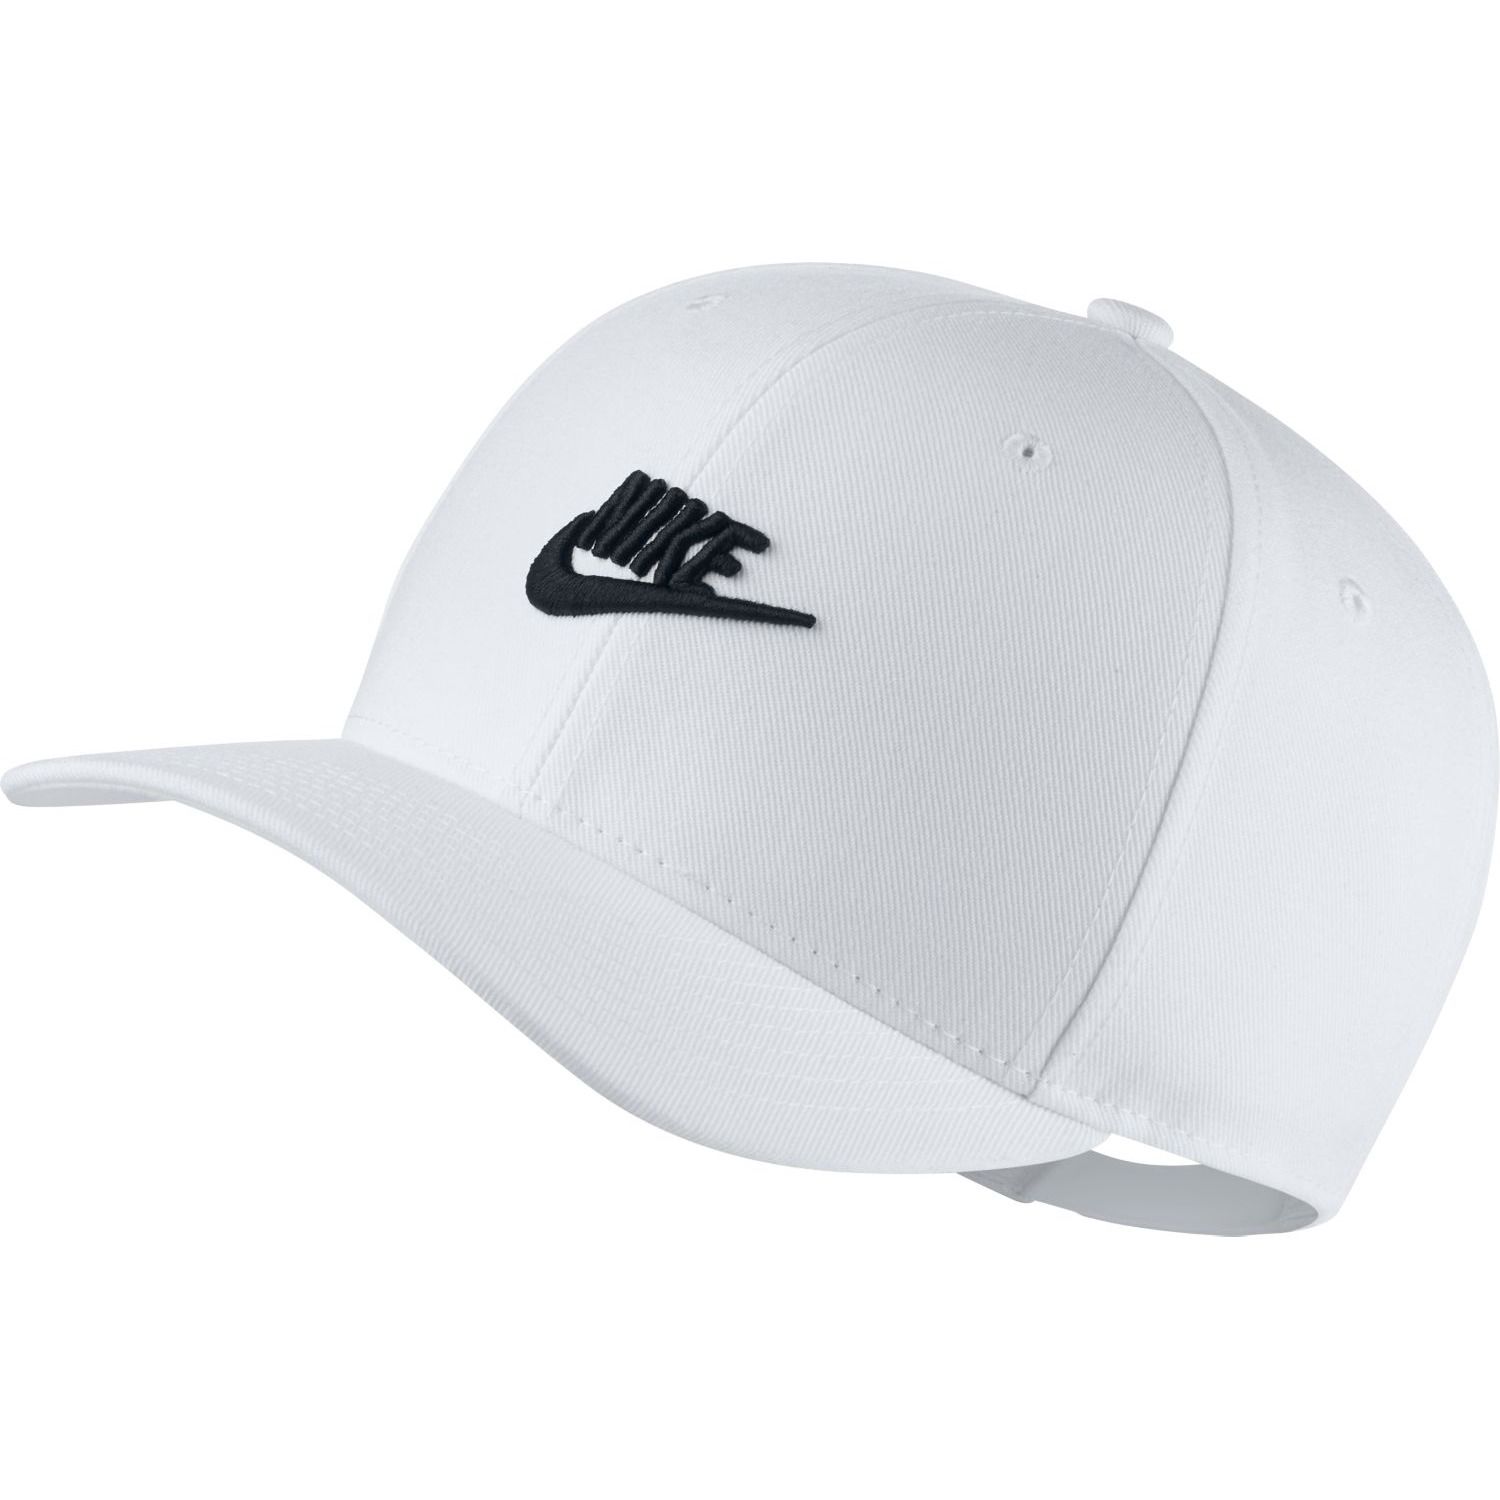 Nike Sportswear Classic '99 Adjustable Hat